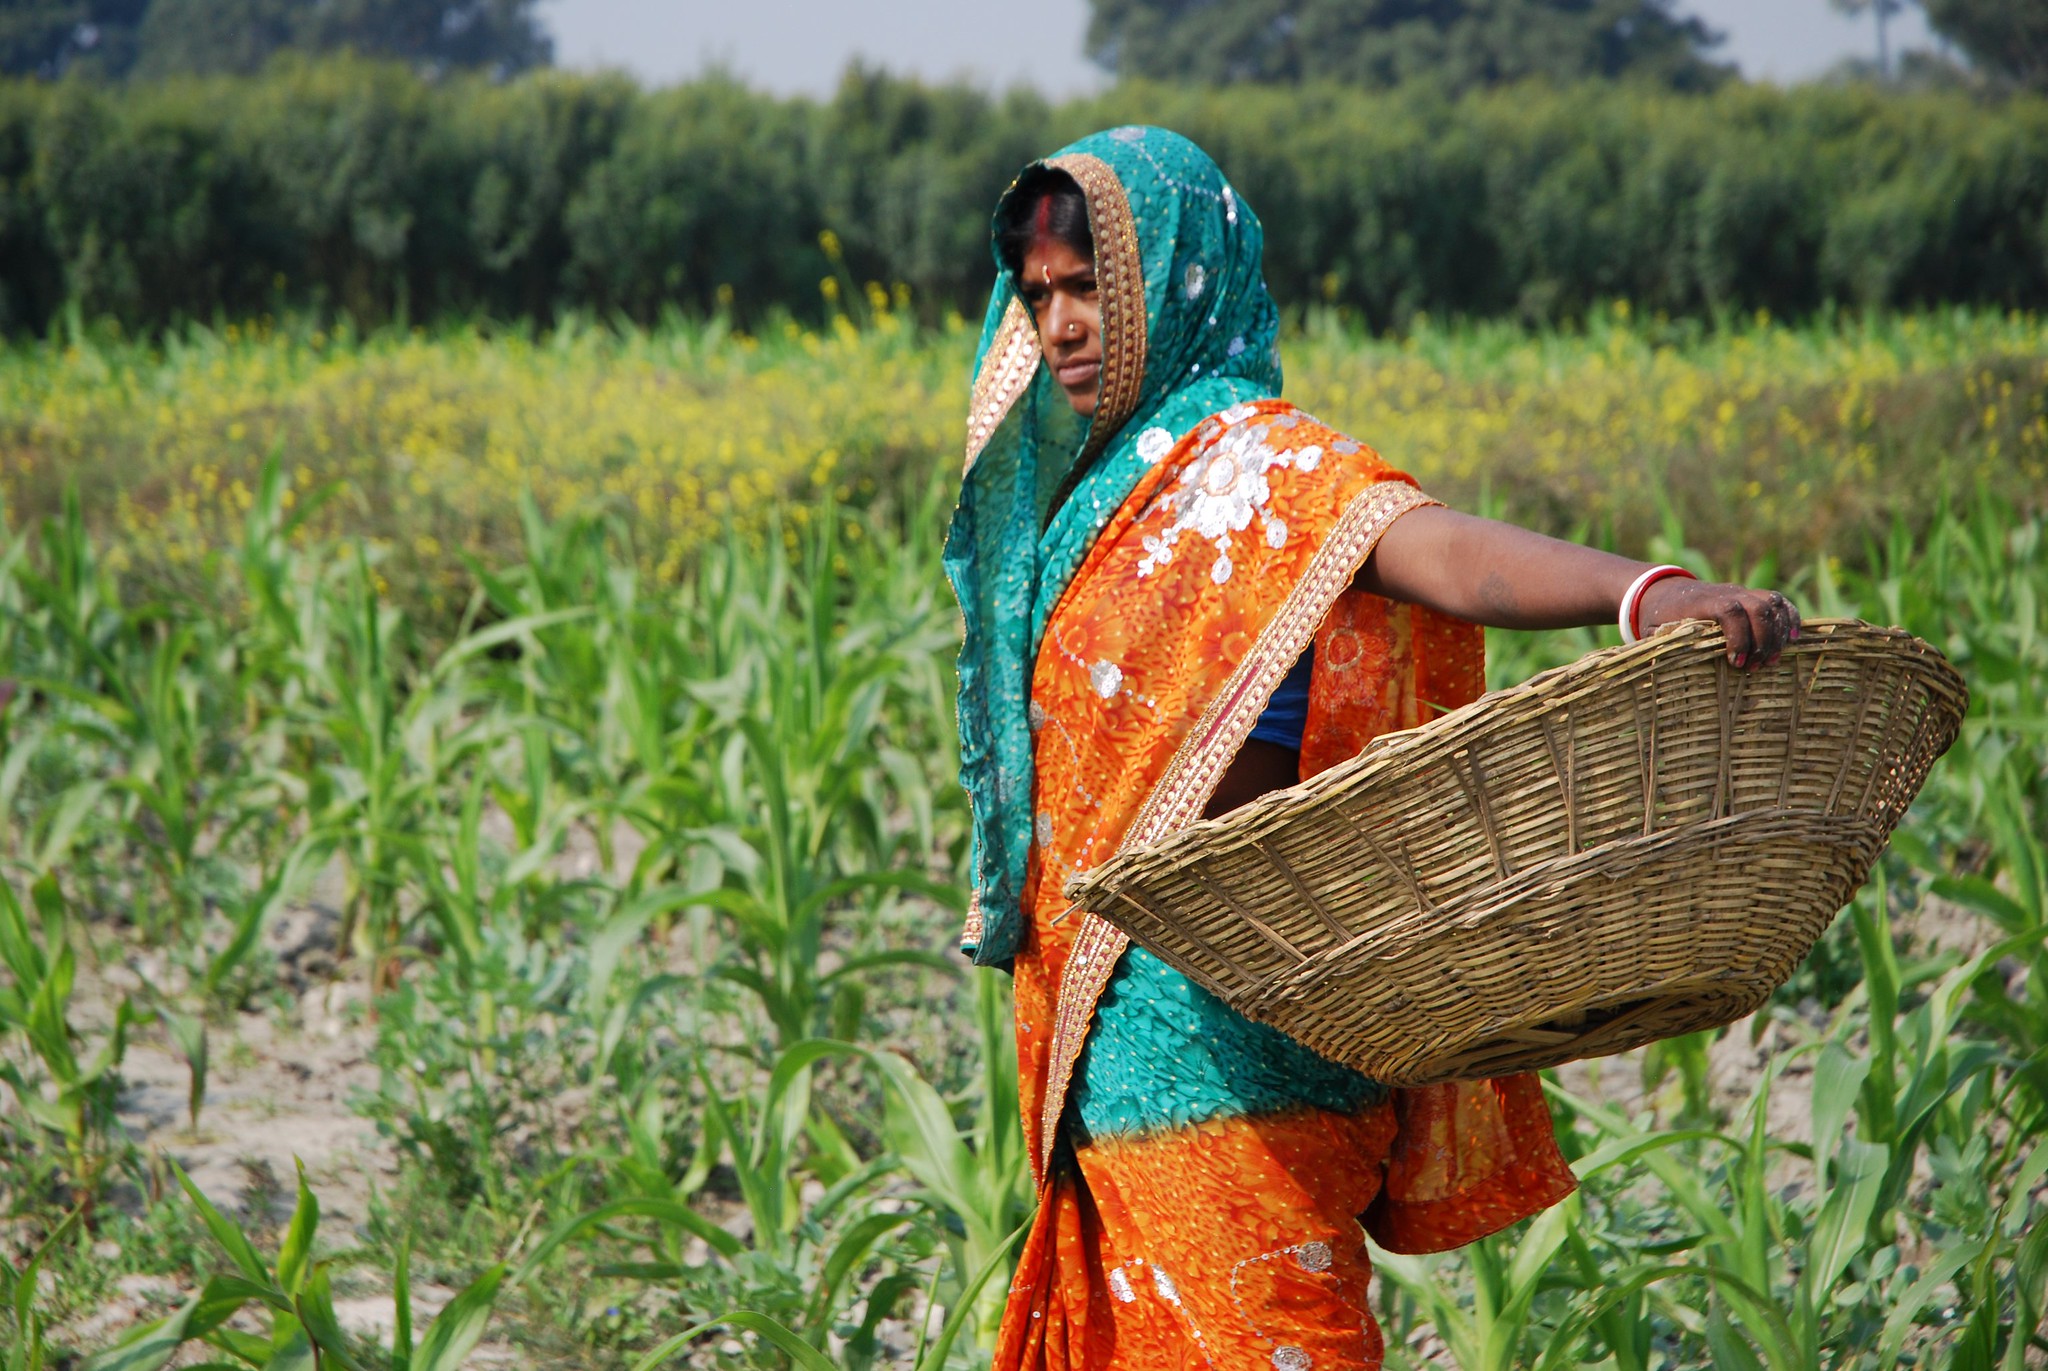 A woman farmer weeding maize field in Bihar, India. Photo: M. DeFreese/CIMMYT